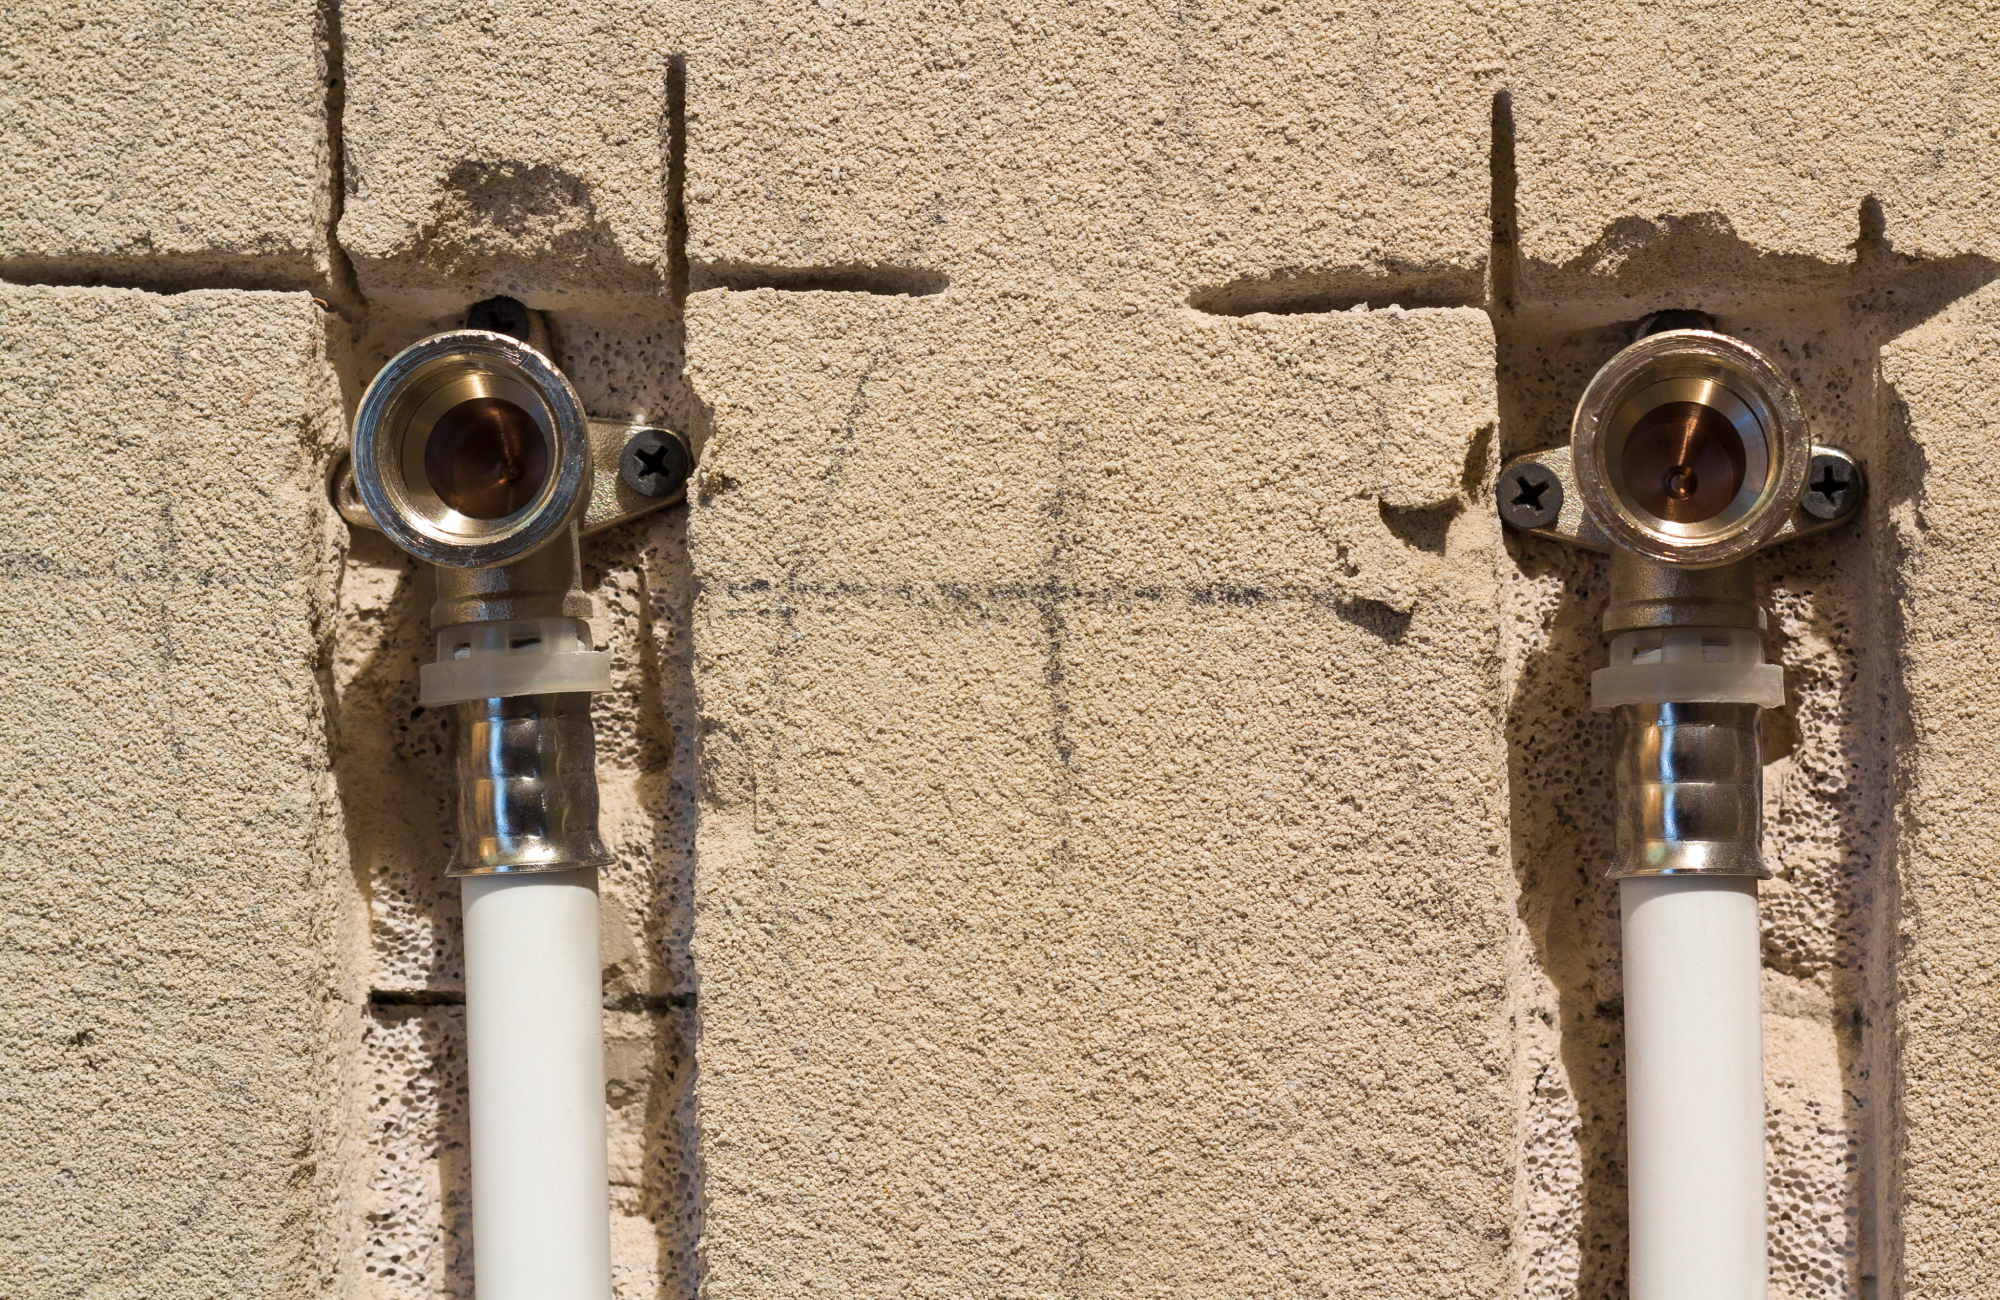 plumbing fixtures installed incorrectly